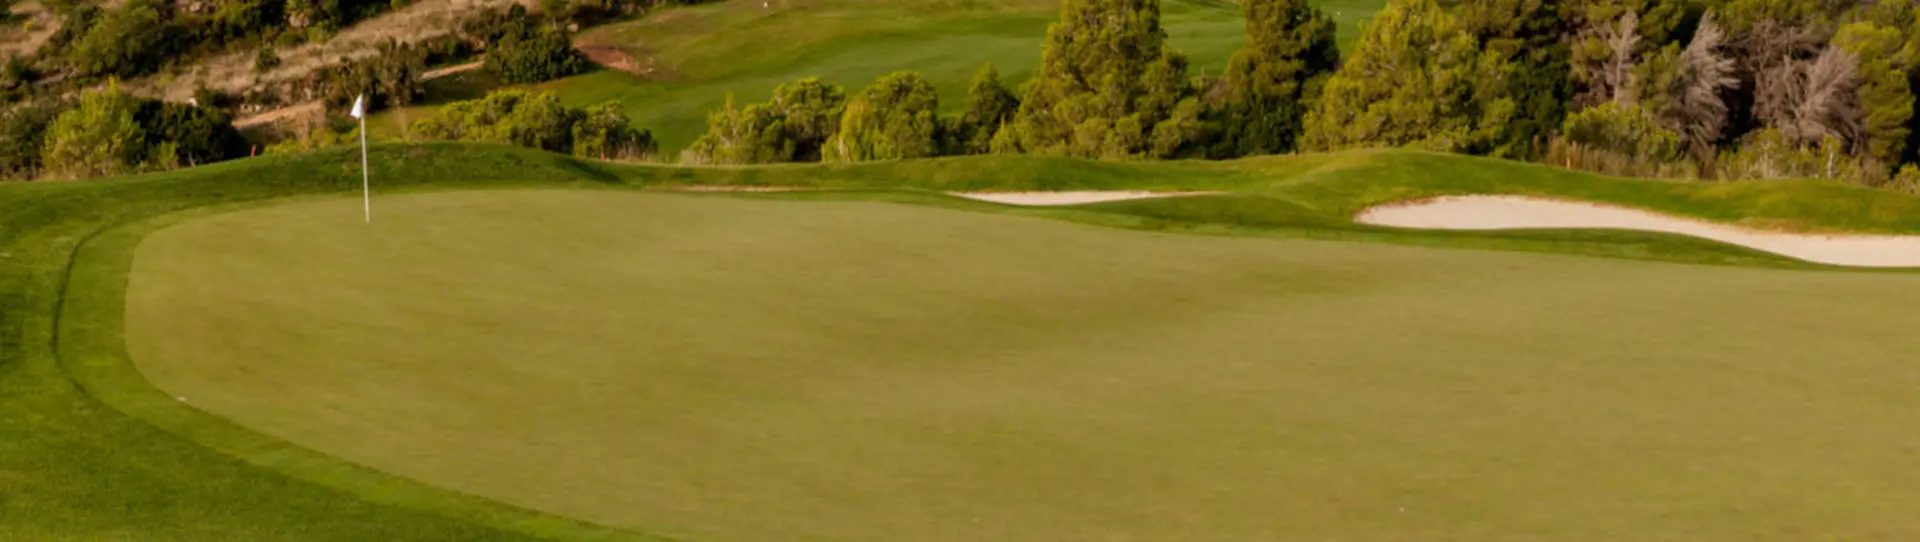 Spain golf courses - La Galiana Golf Course - Photo 1